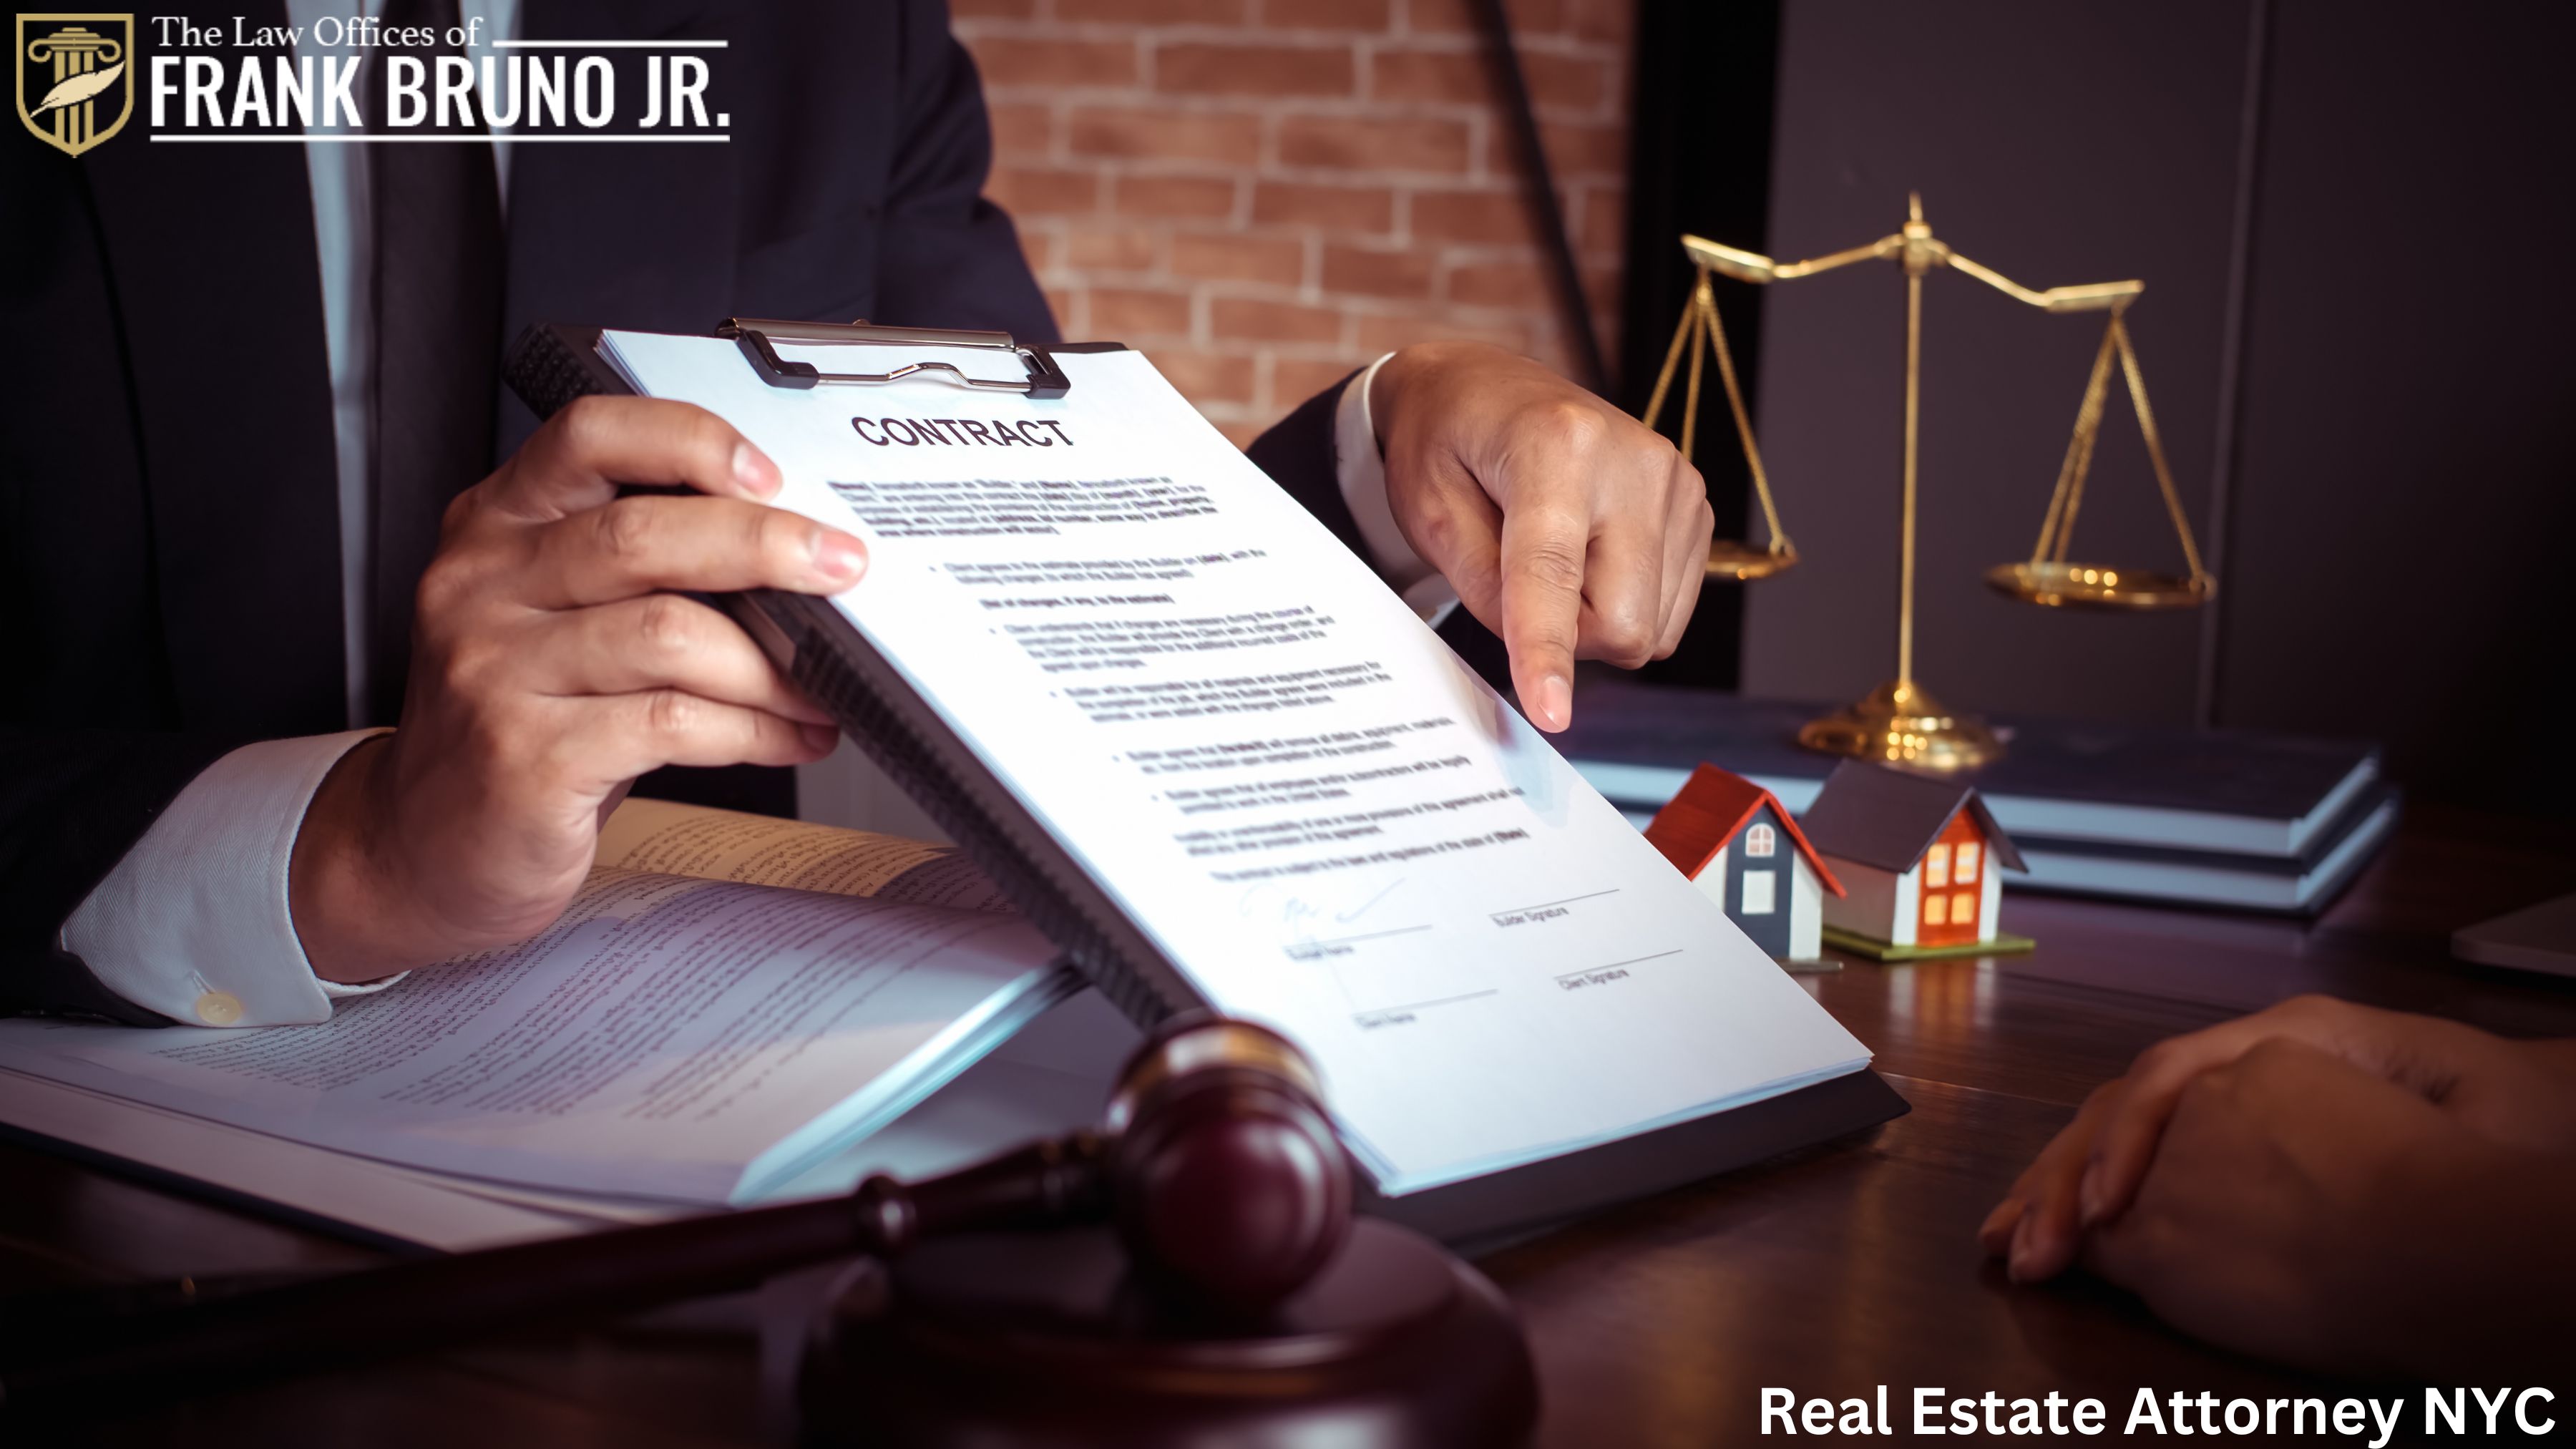 Real Estate Attorney NYC - New York - New York ID1538740 4